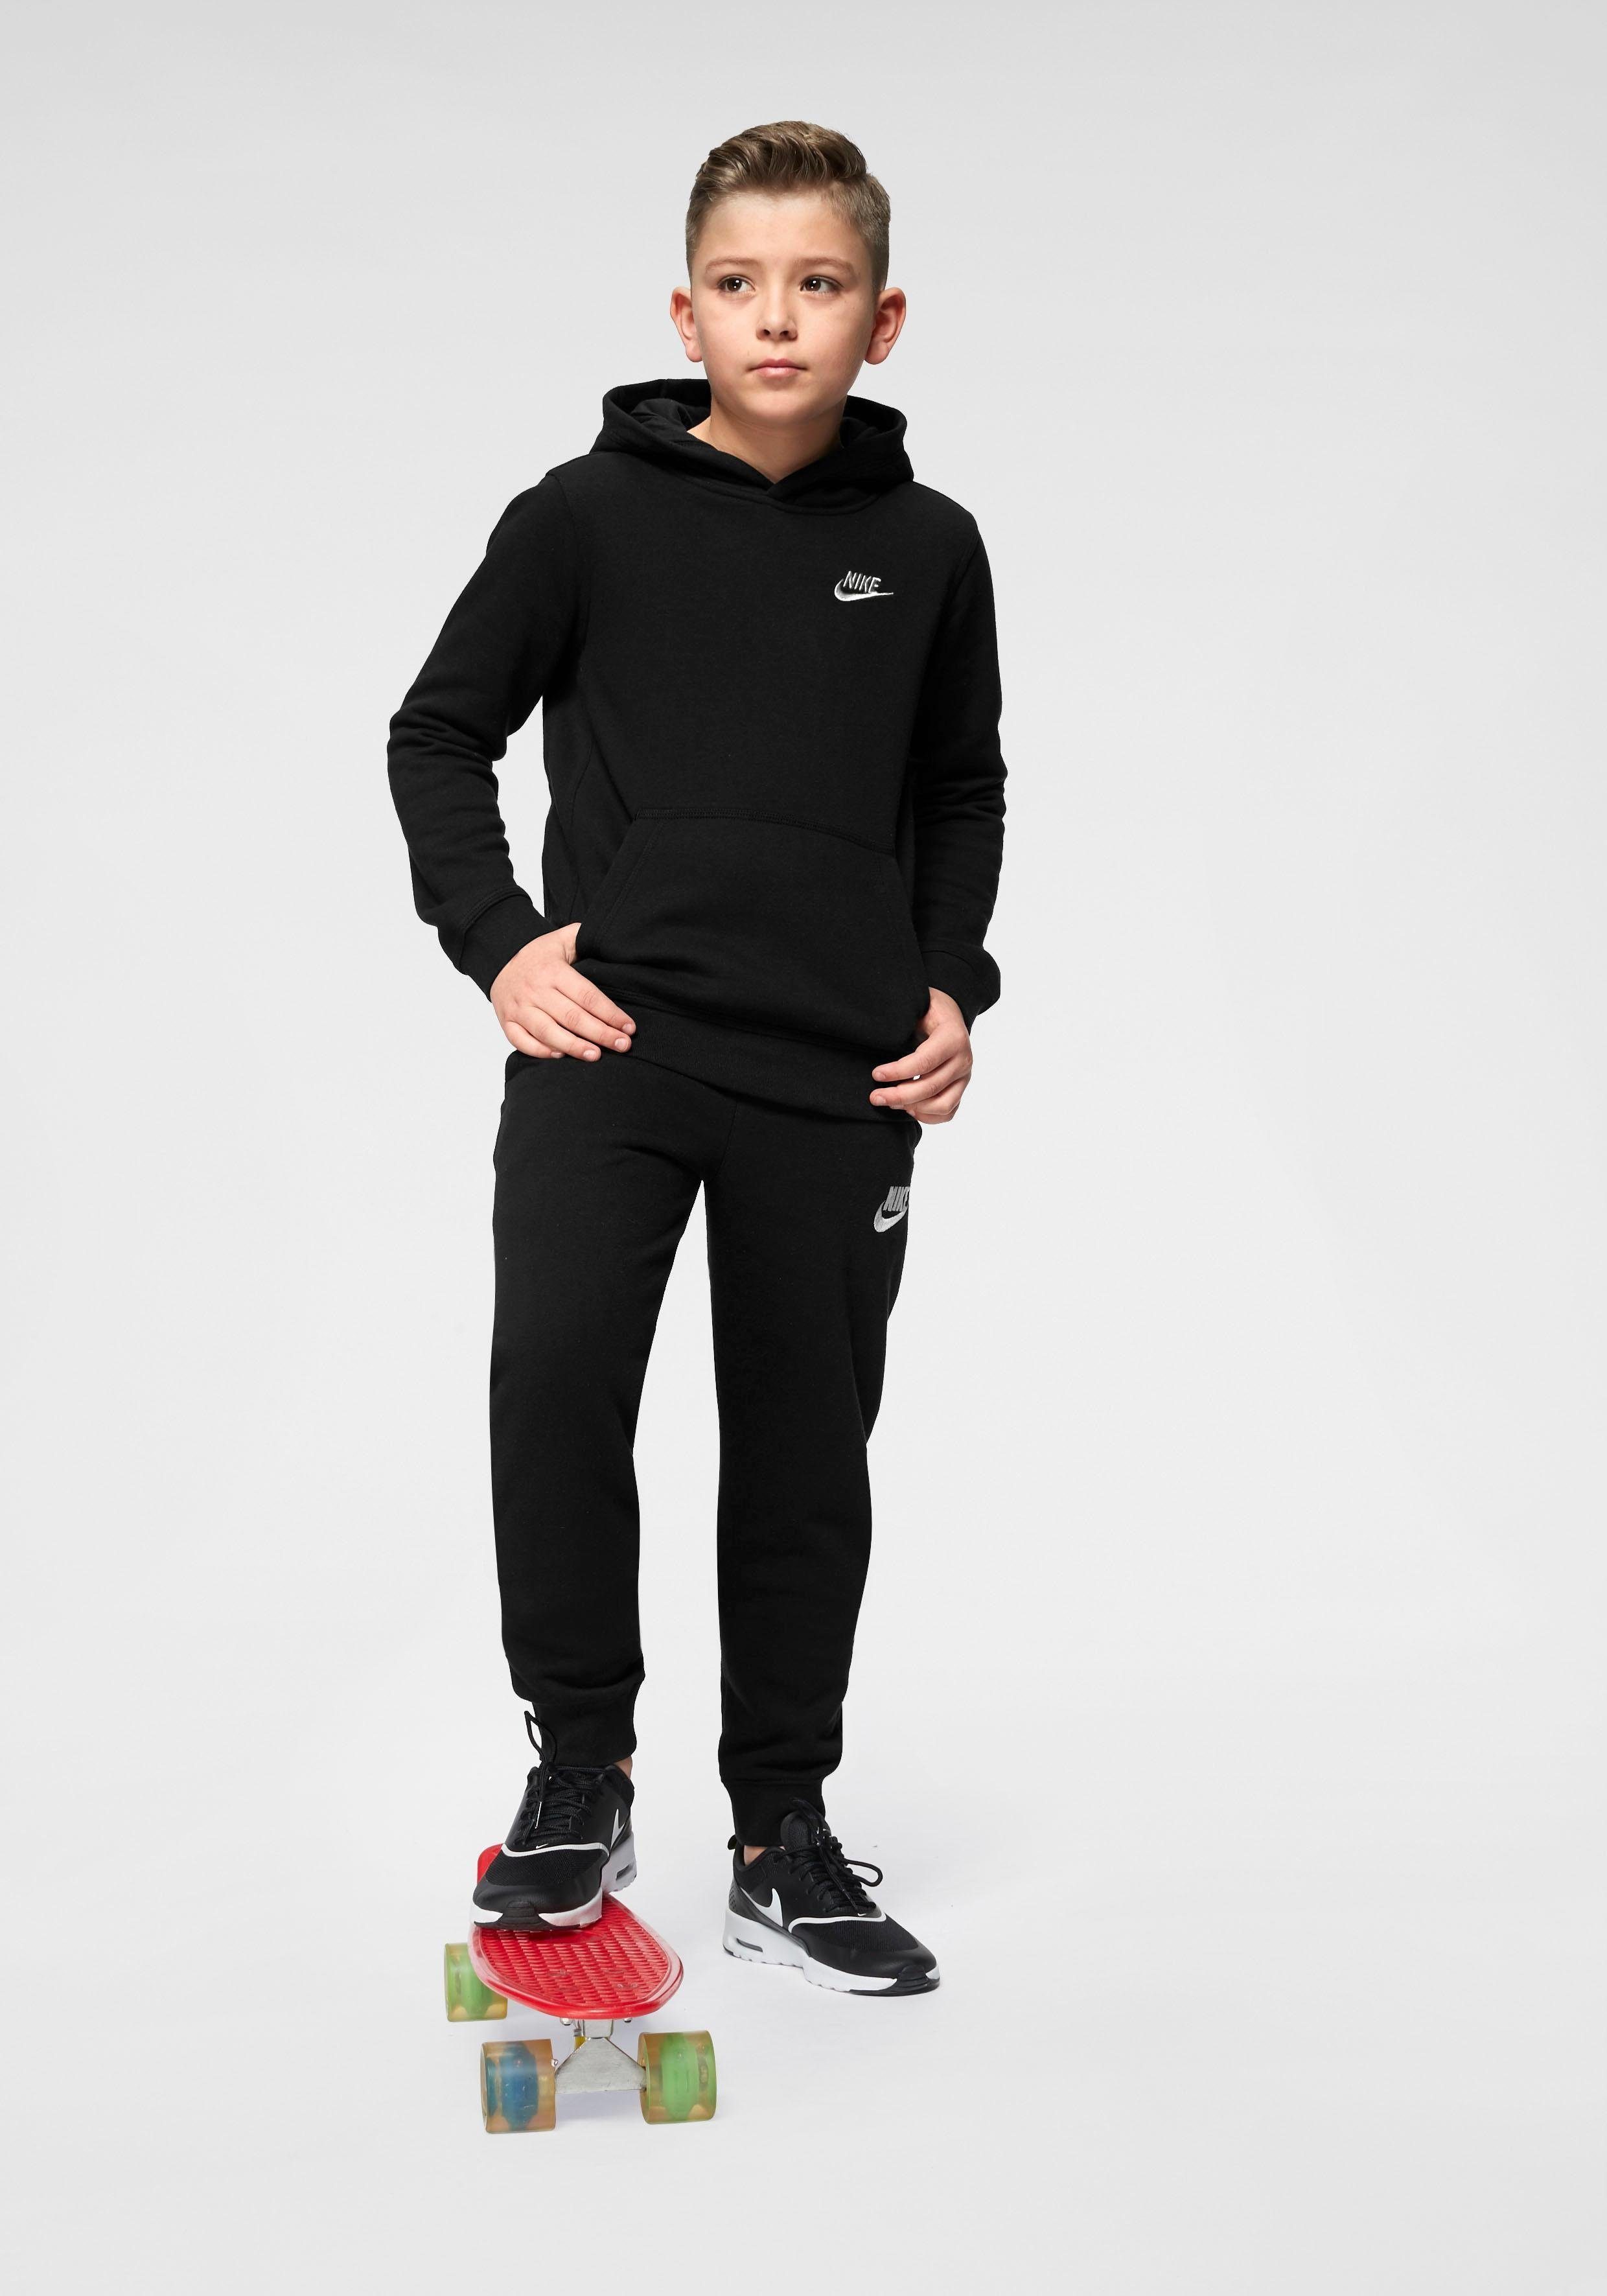 Nike Big Kids' Sportswear Kapuzensweatshirt Pullover Hoodie schwarz Club